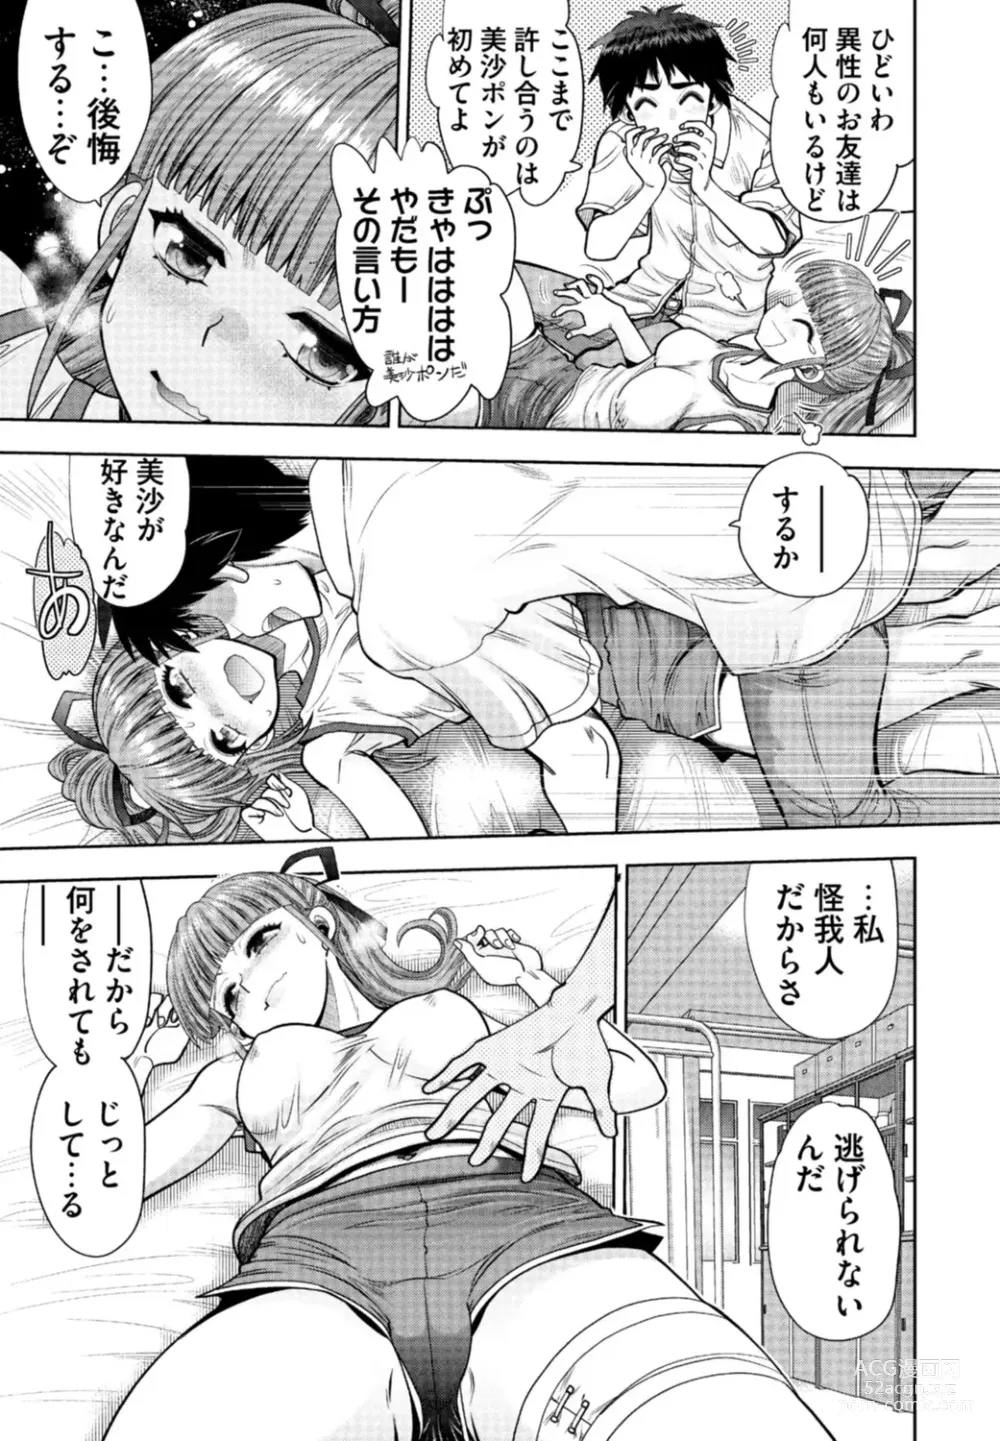 Page 175 of manga Doukyuusei  Remake Adult Edition